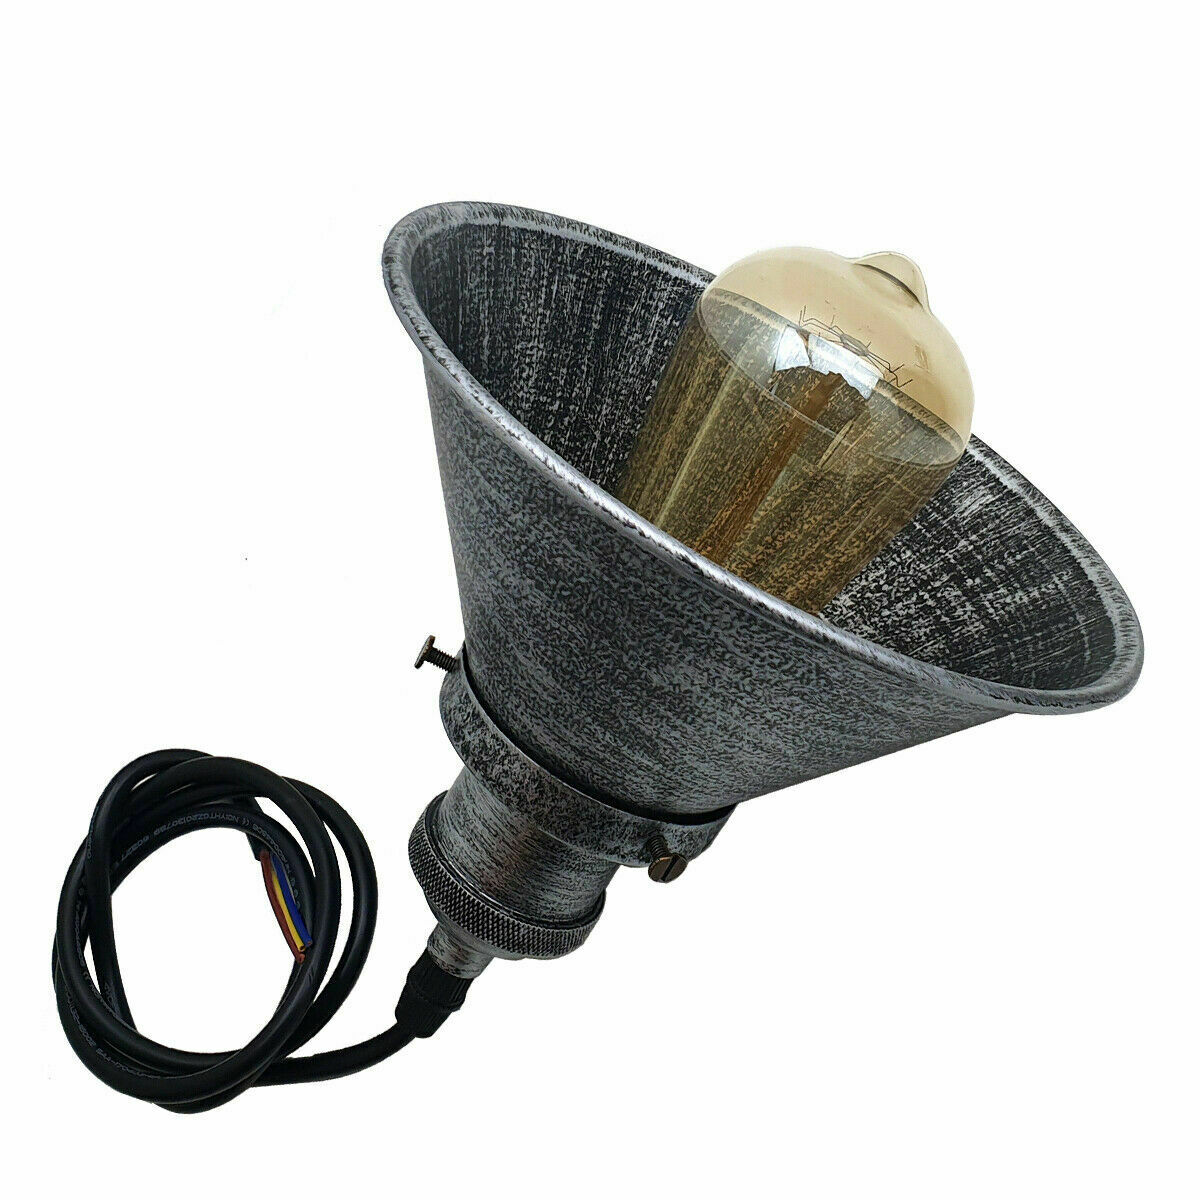 New Style Vintage Industrial Retro Loft Metal Ceiling E27 Lamp Shade Pendant Light~2204 - LEDSone UK Ltd